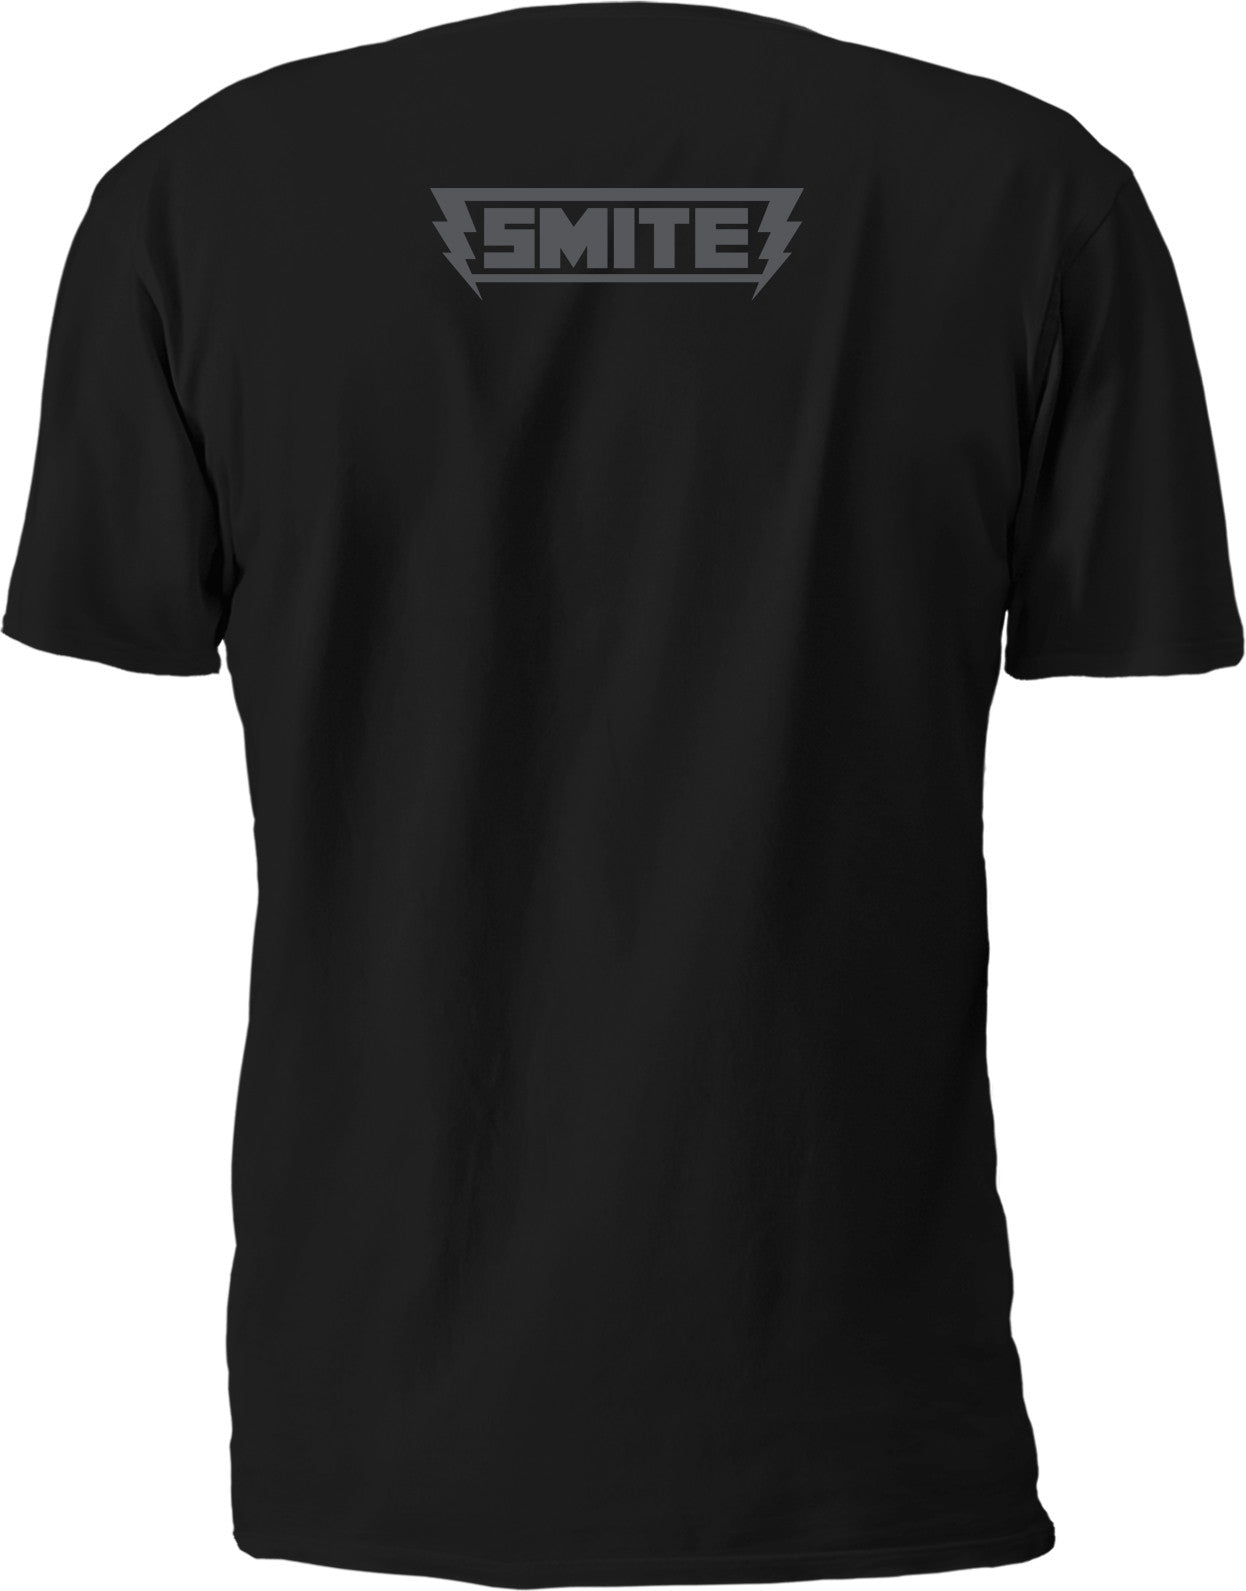 Smite Gods: Fenrir T-shirt